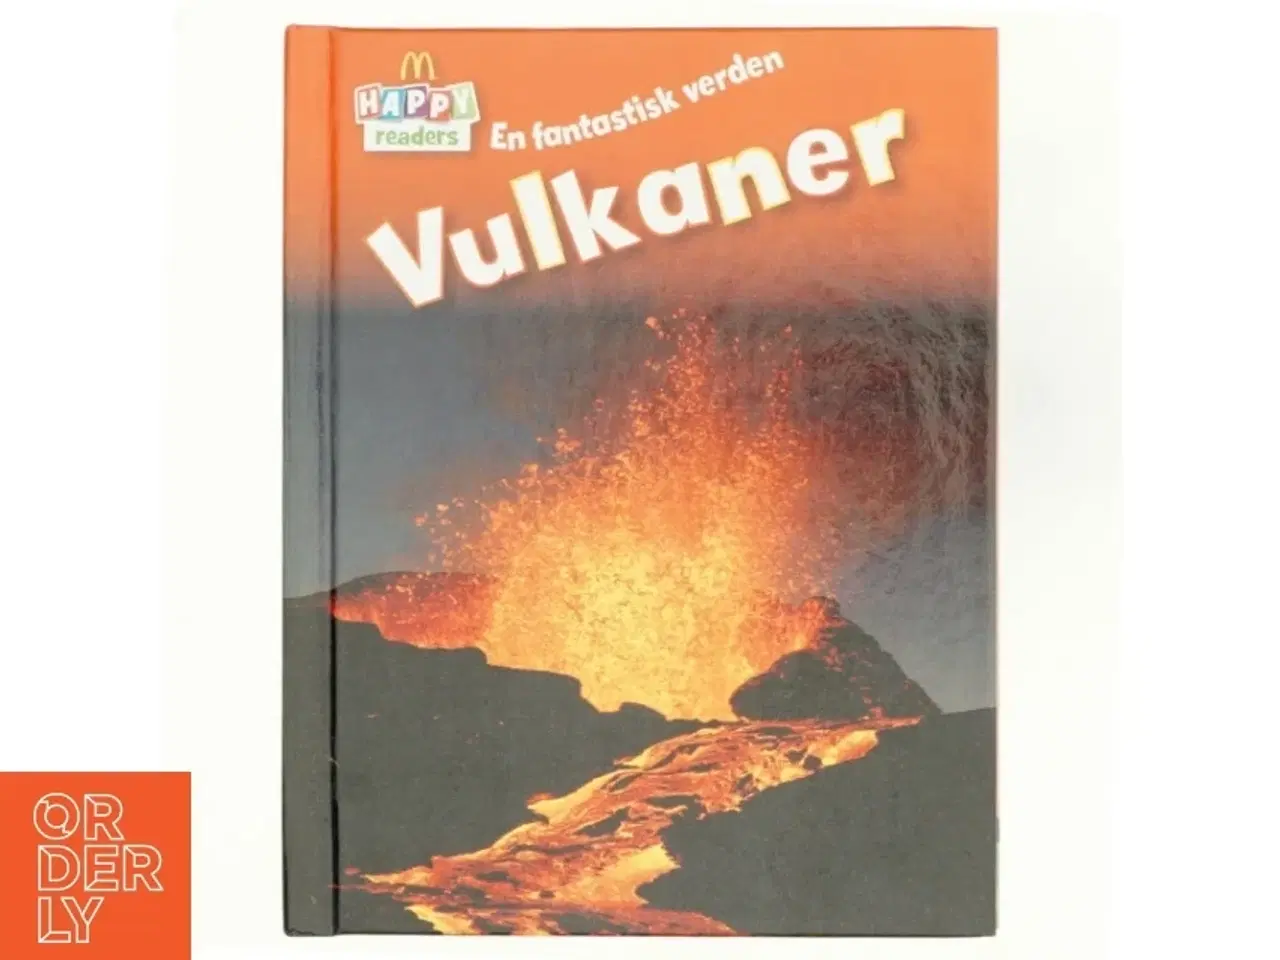 Billede 1 - Vulkaner